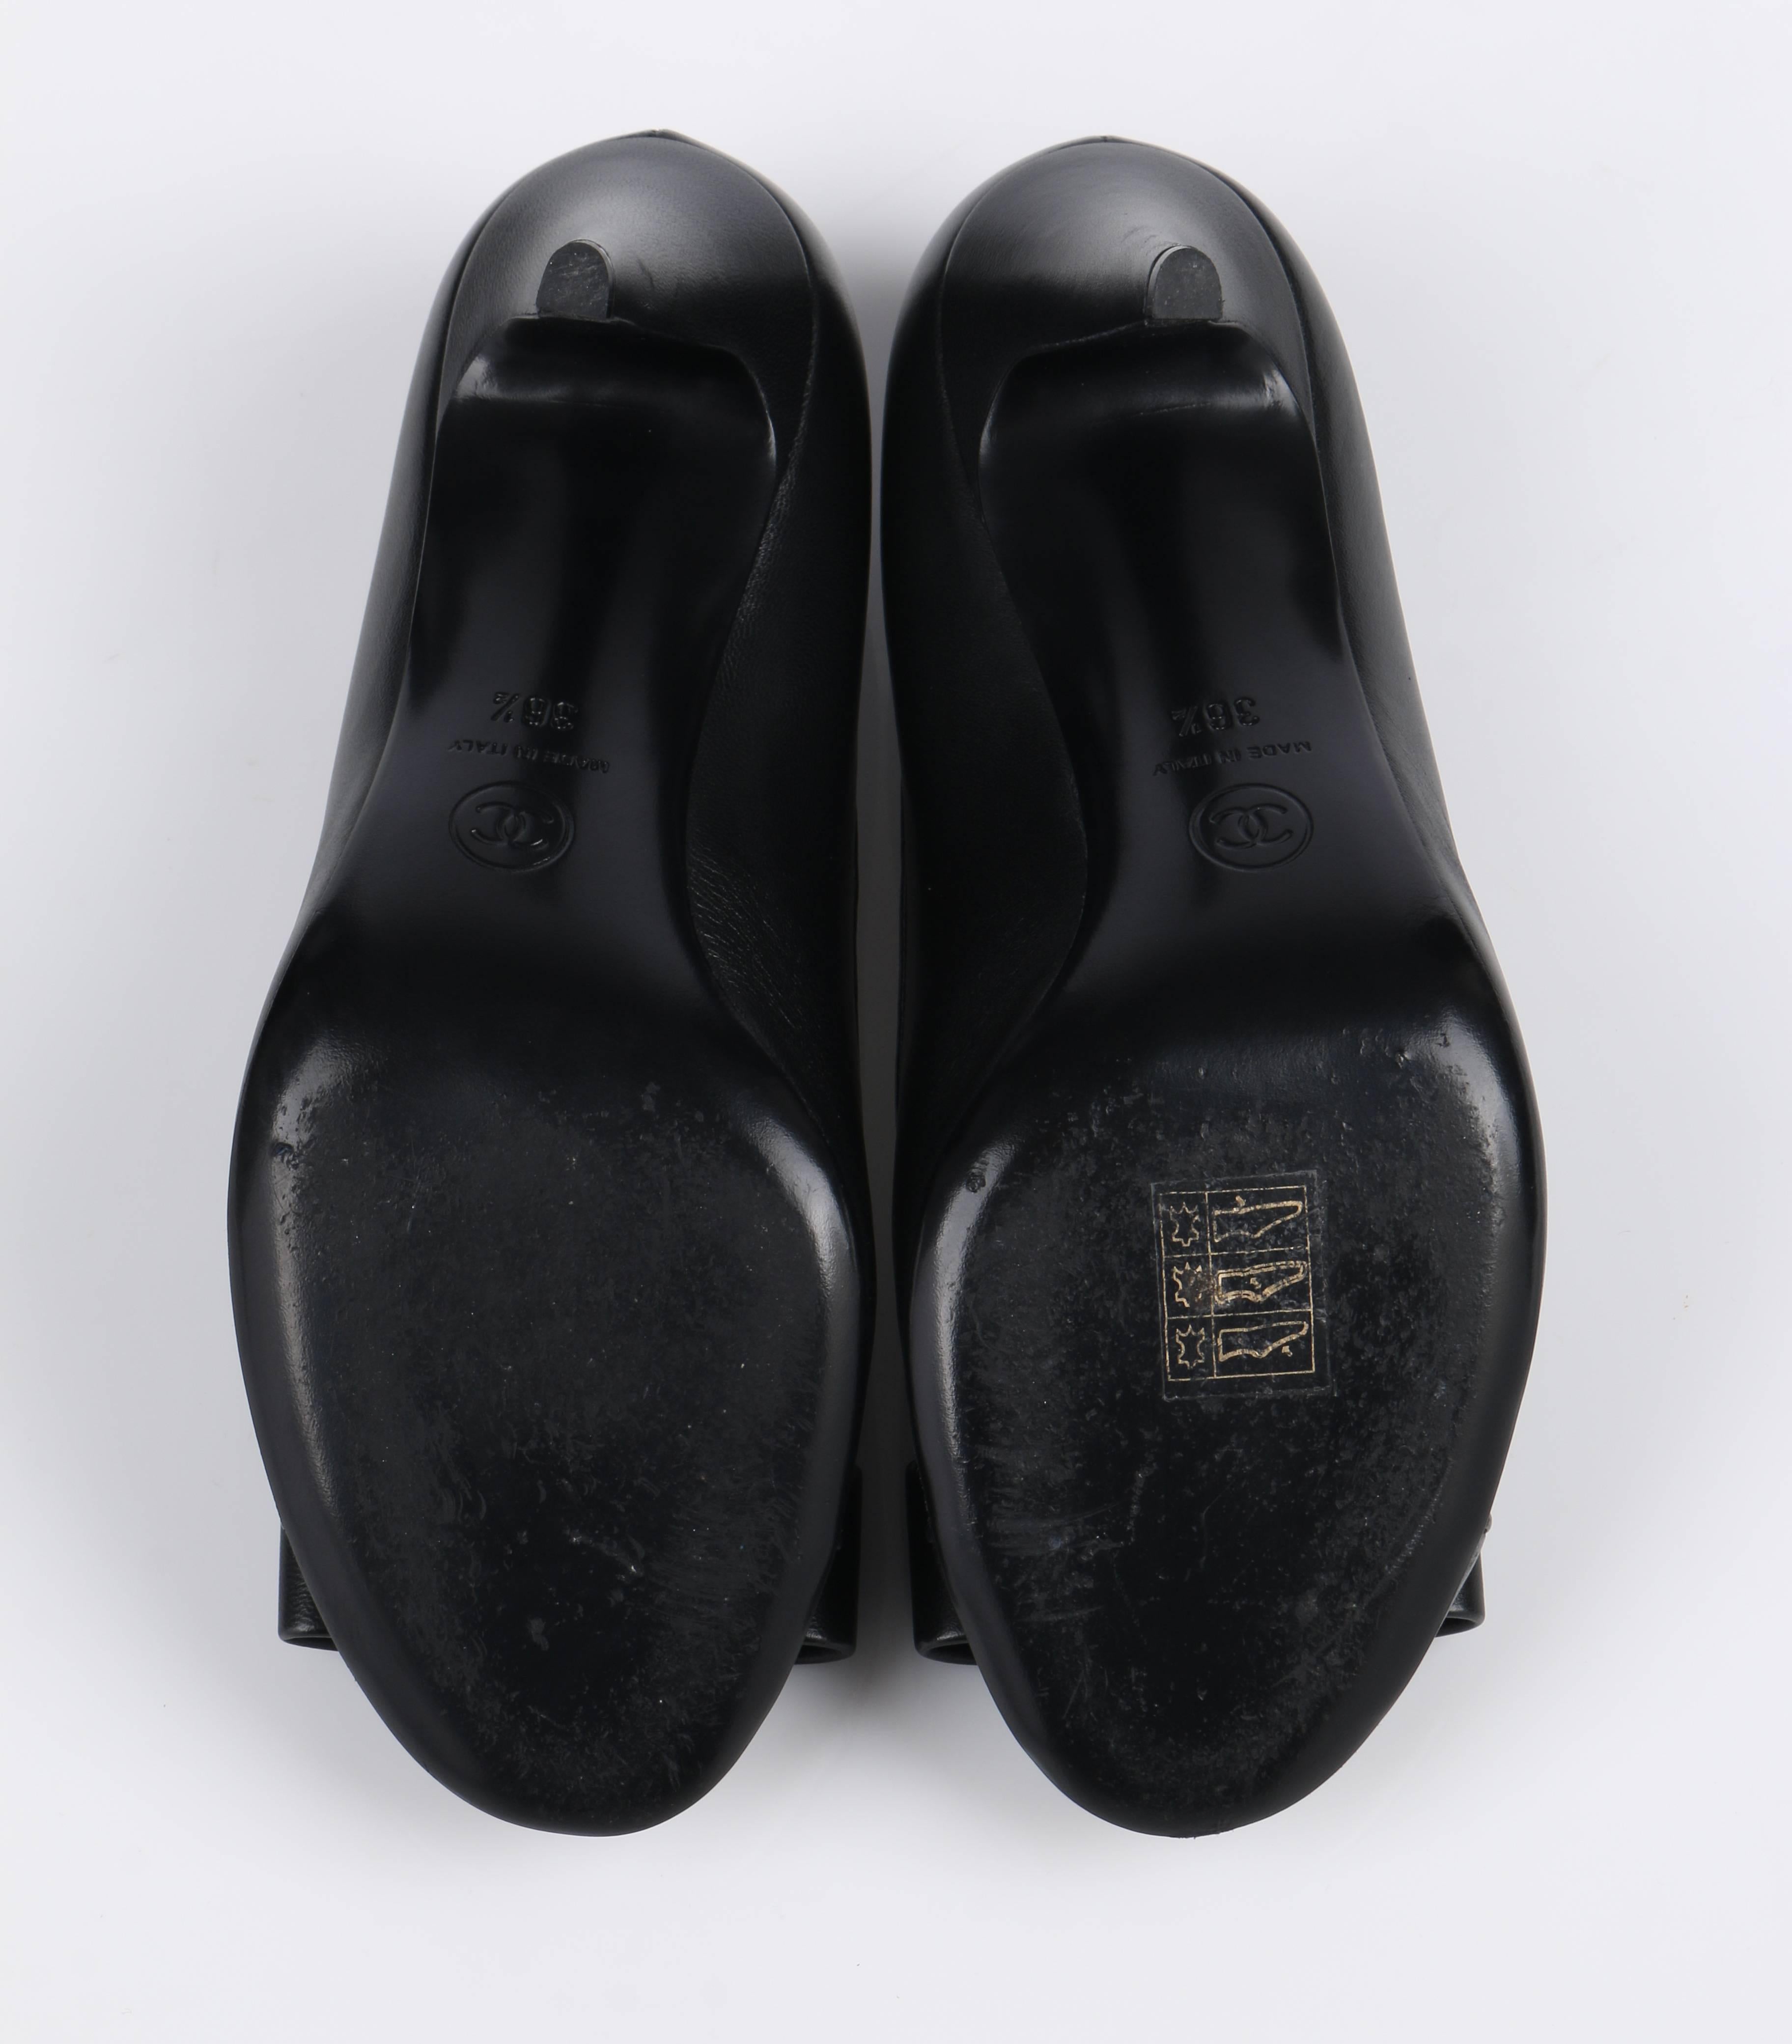 CHANEL S/S 2015 Classic Black Leather CC Logo Bow Front Pumps Shoes 36.5 1